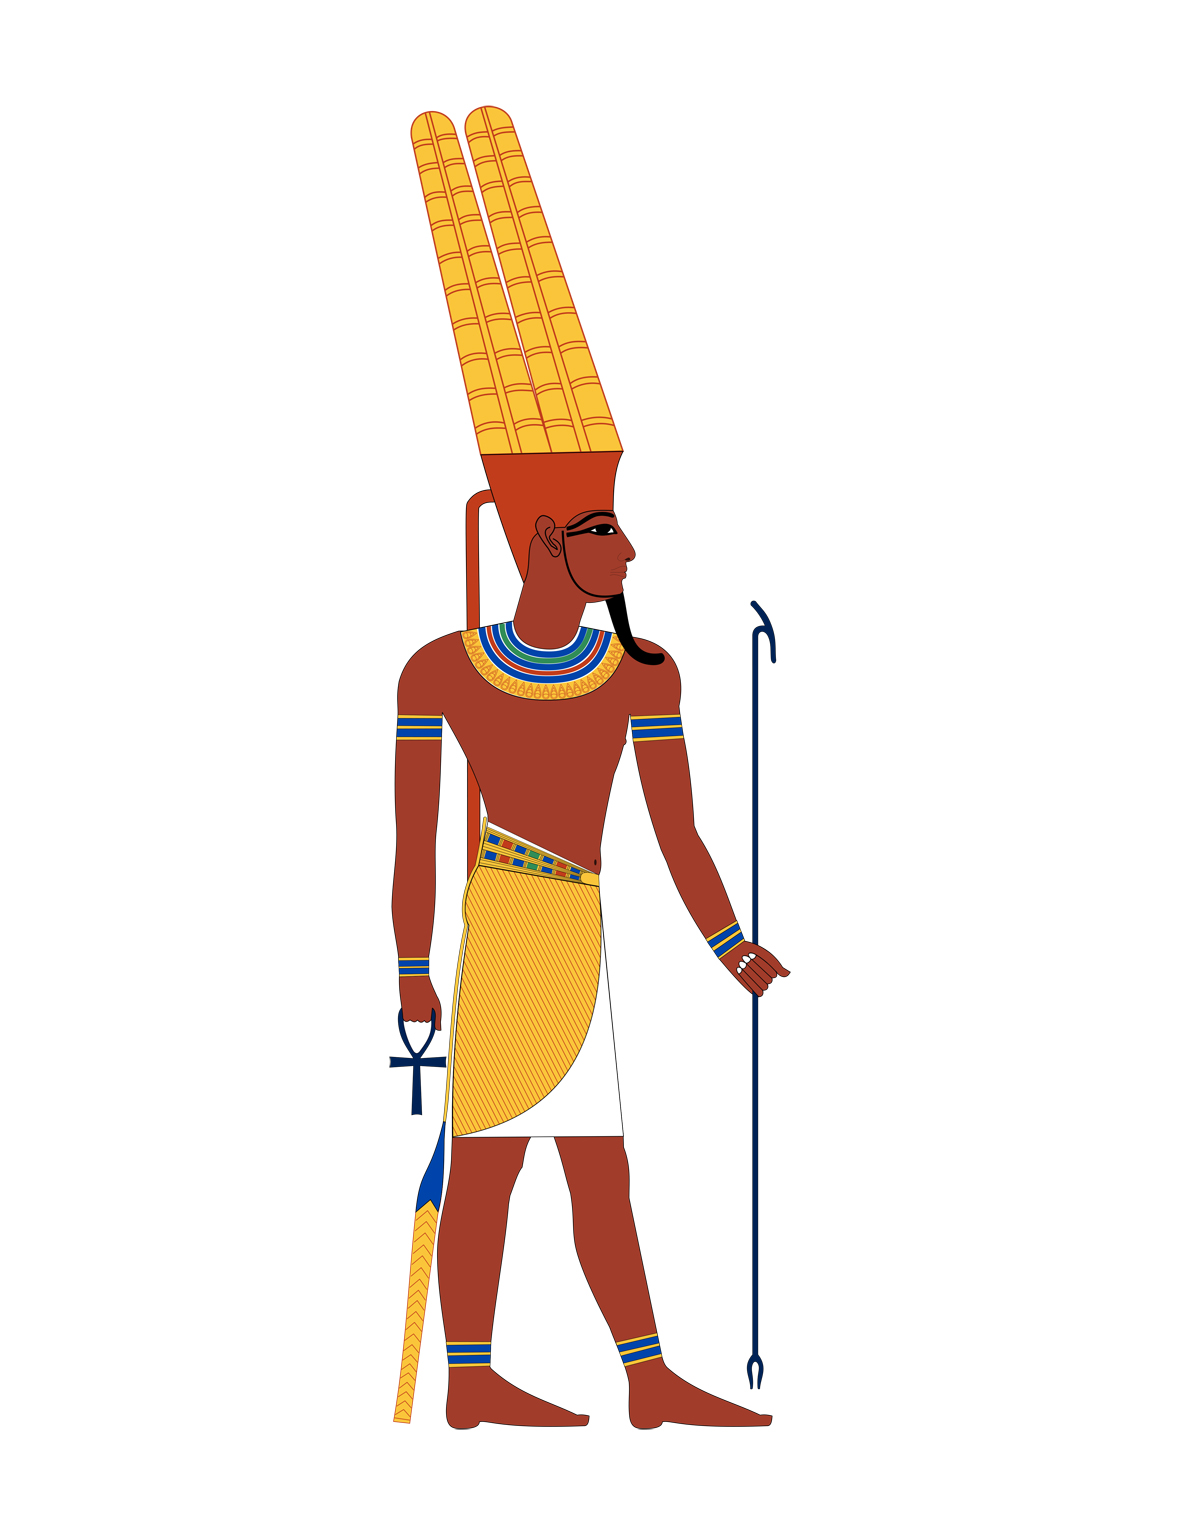 Amon gods. Бог Амон в древнем Египте. Бог Амон ра в древнем Египте. Египетская мифология Бог Амон. Бог солнца в Египте Амон.